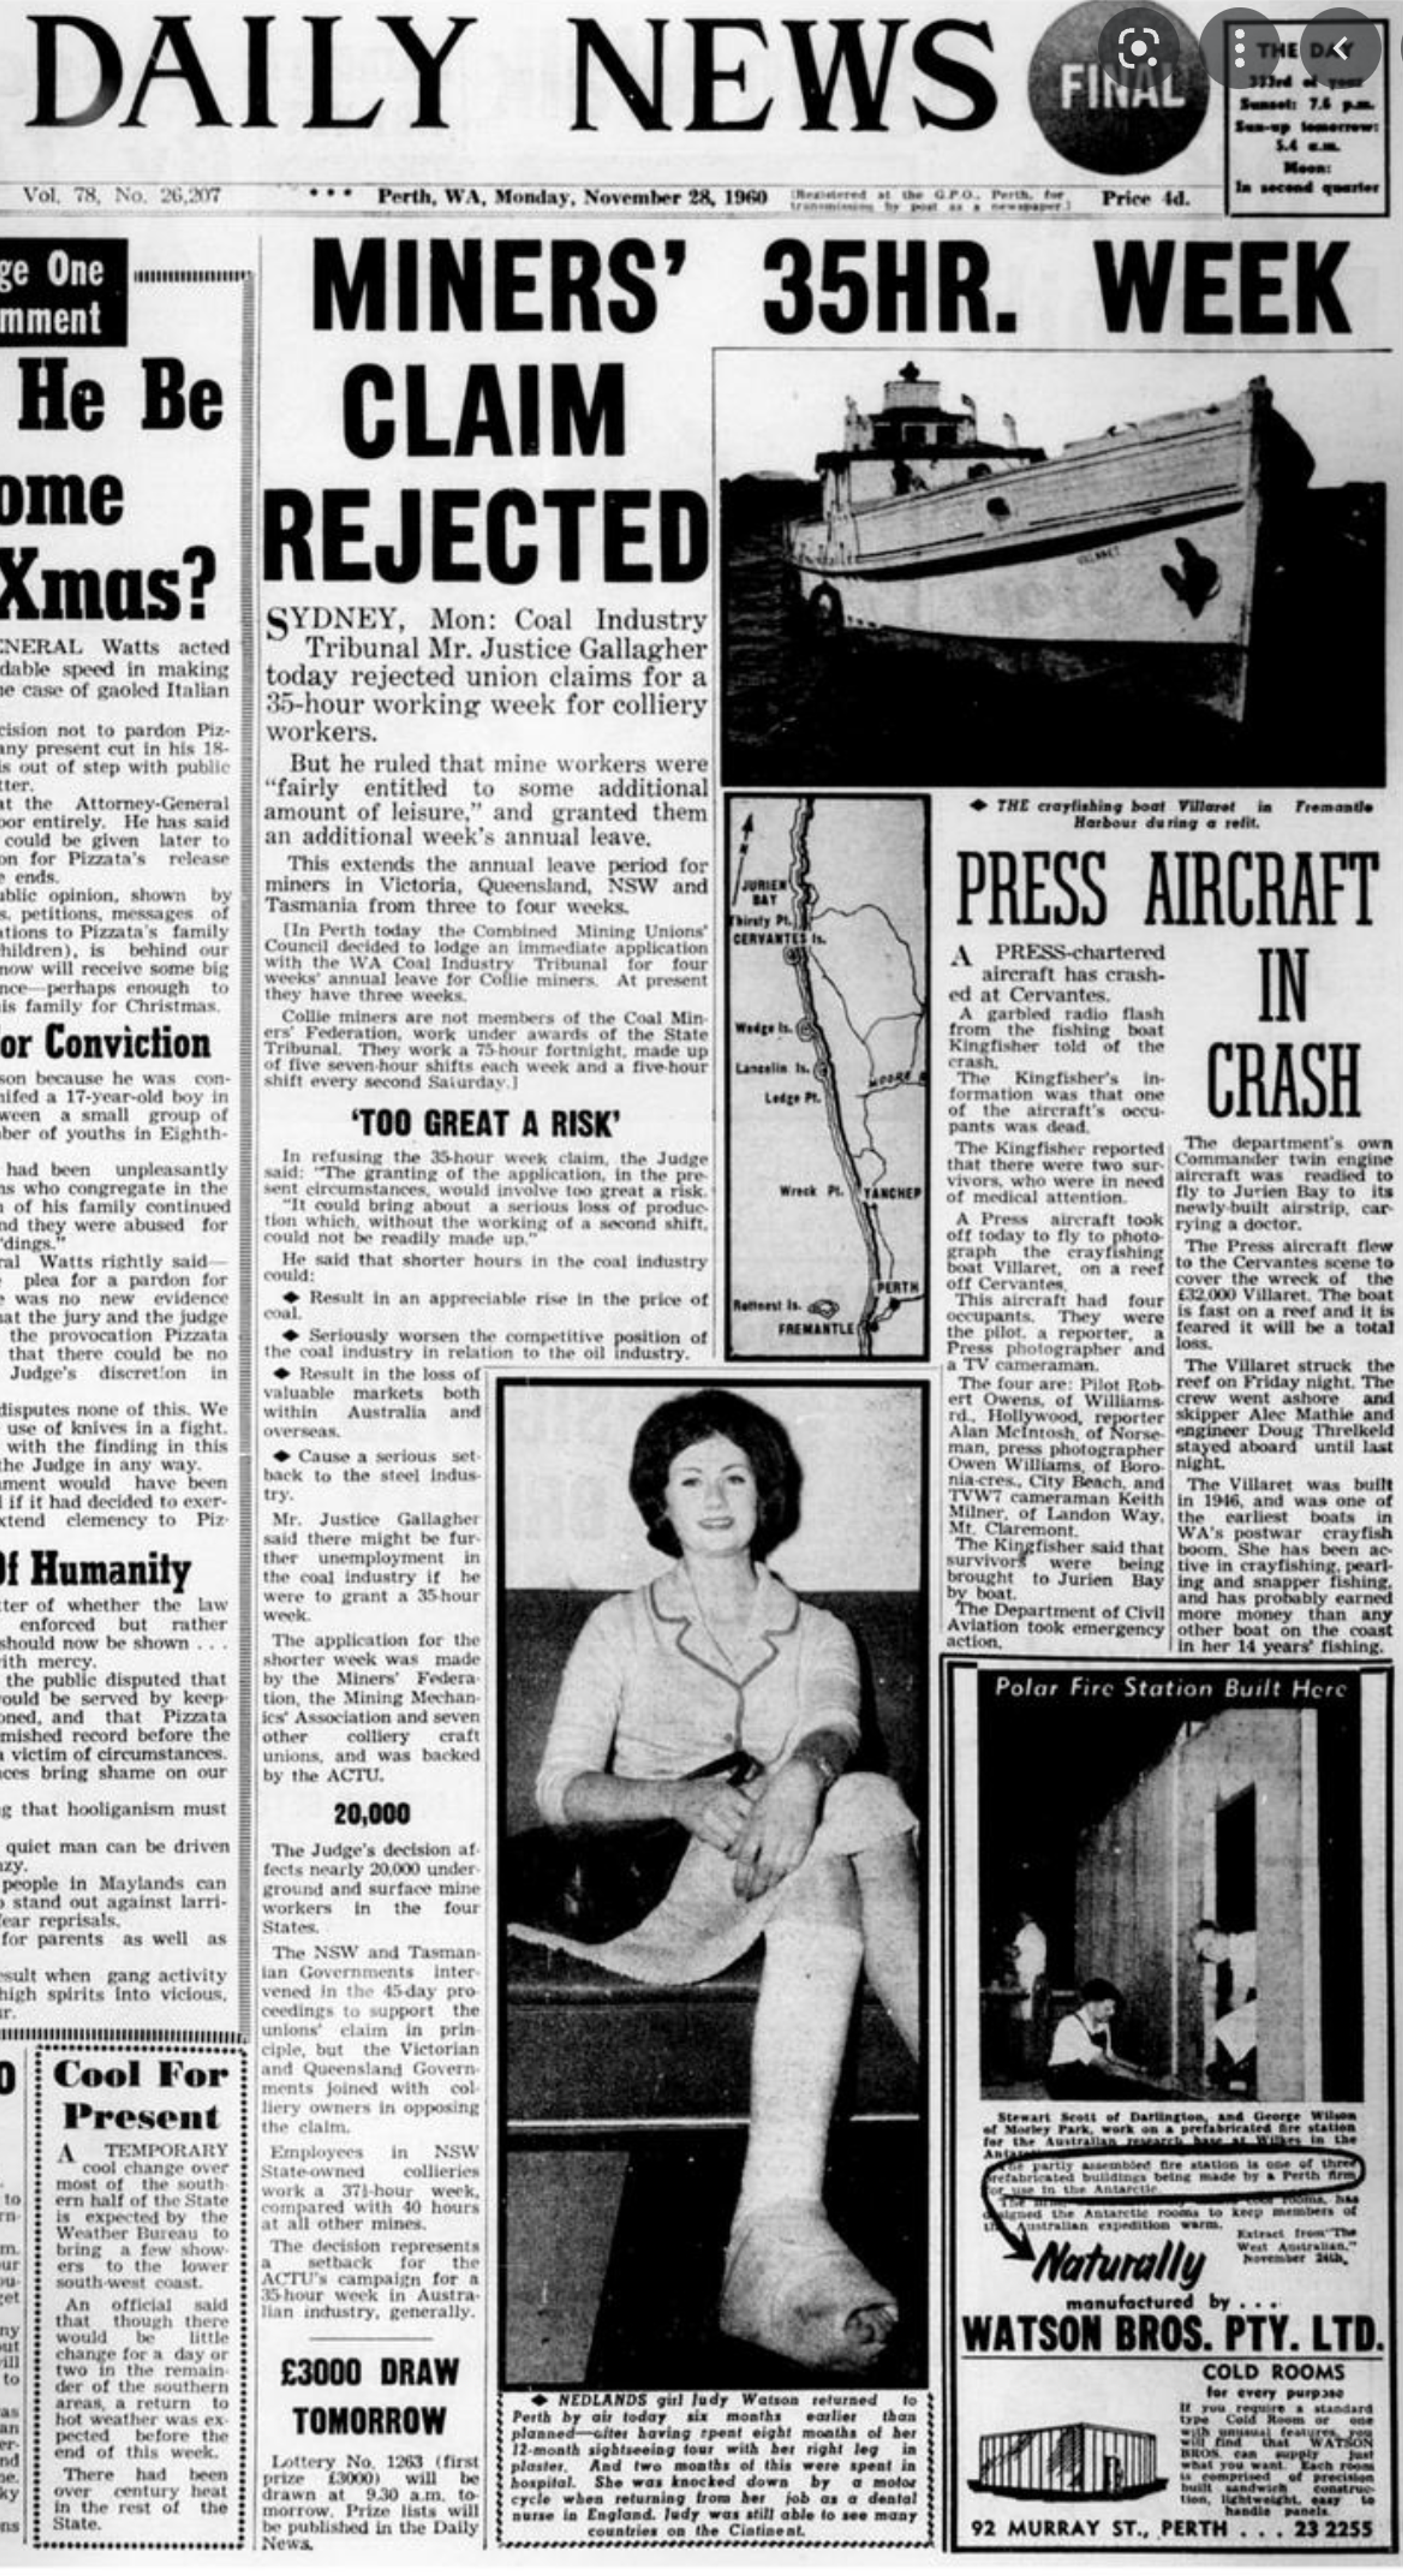 The Daily News, Monday November 28, 1960